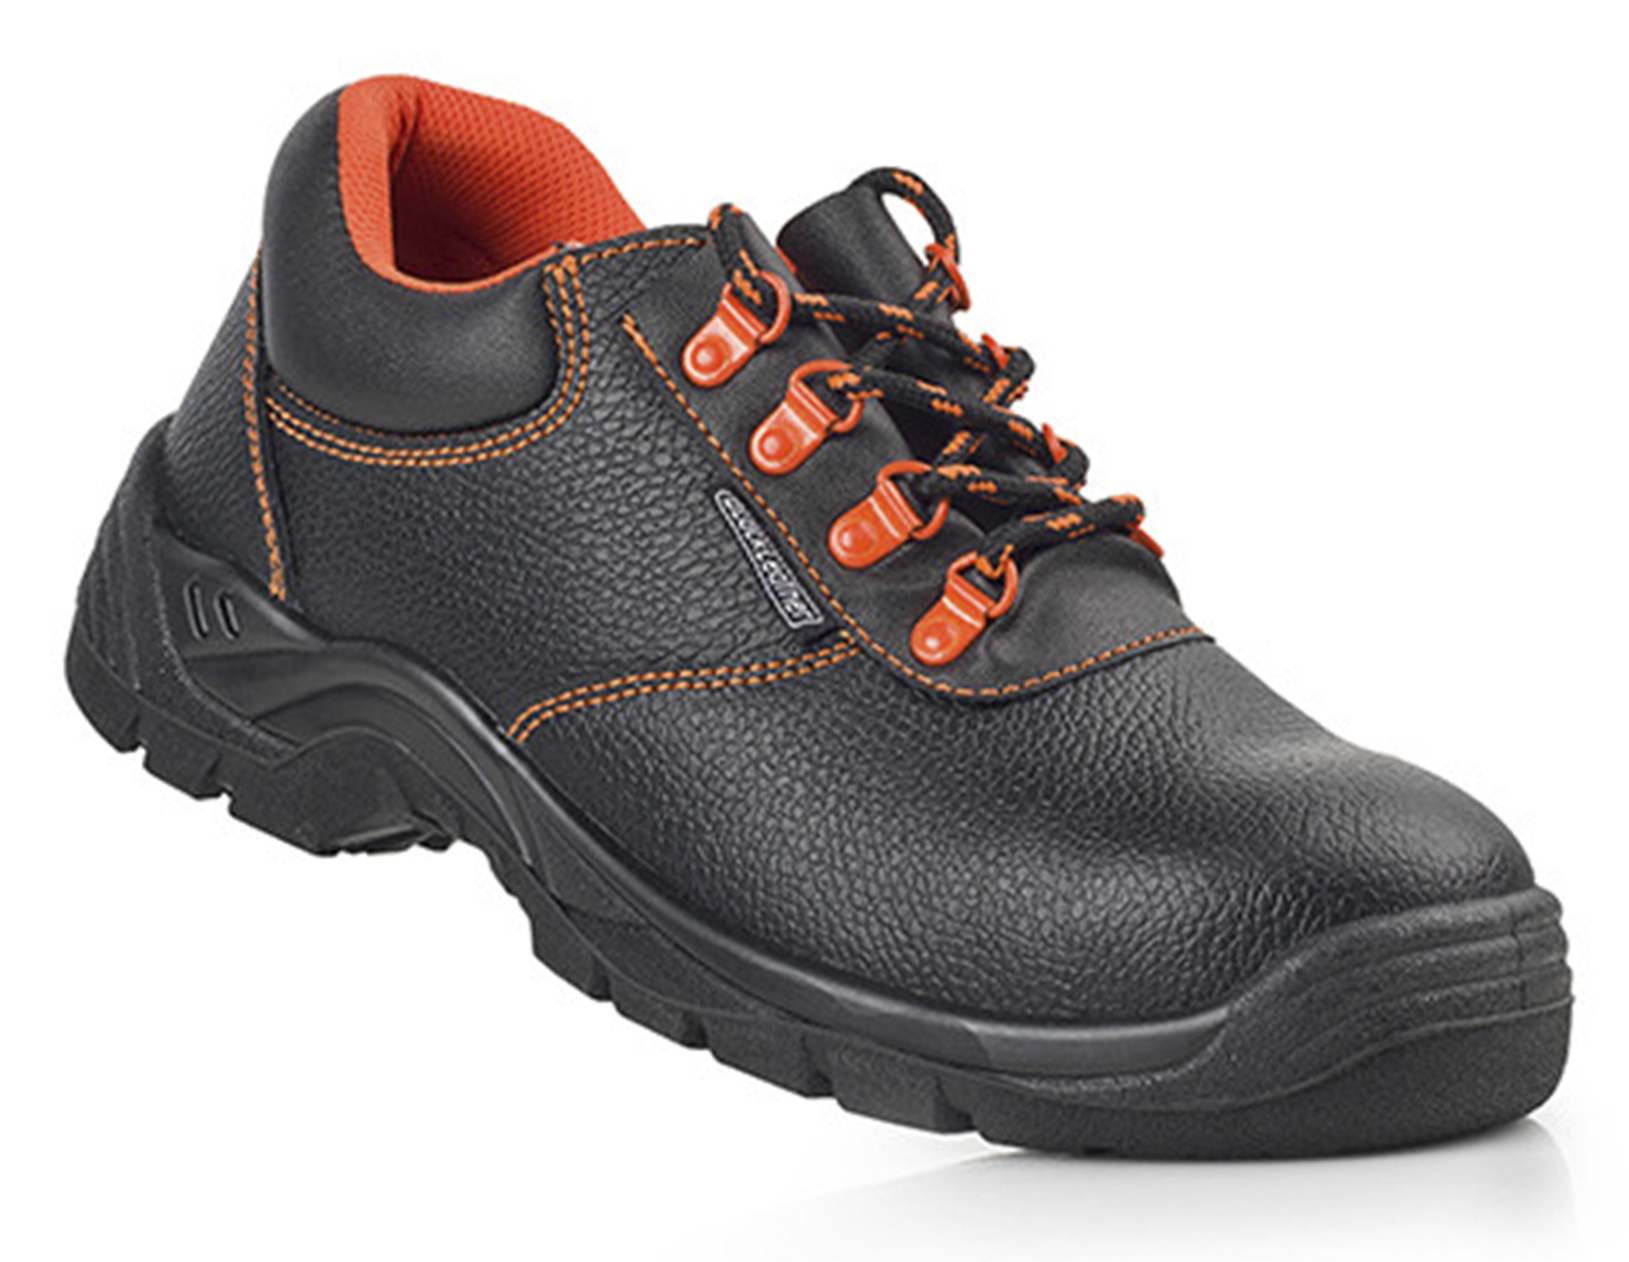 ZECO1 Safety Footwear BlackLeather Footwear mod. ZECO1 (S3 SRC E A).